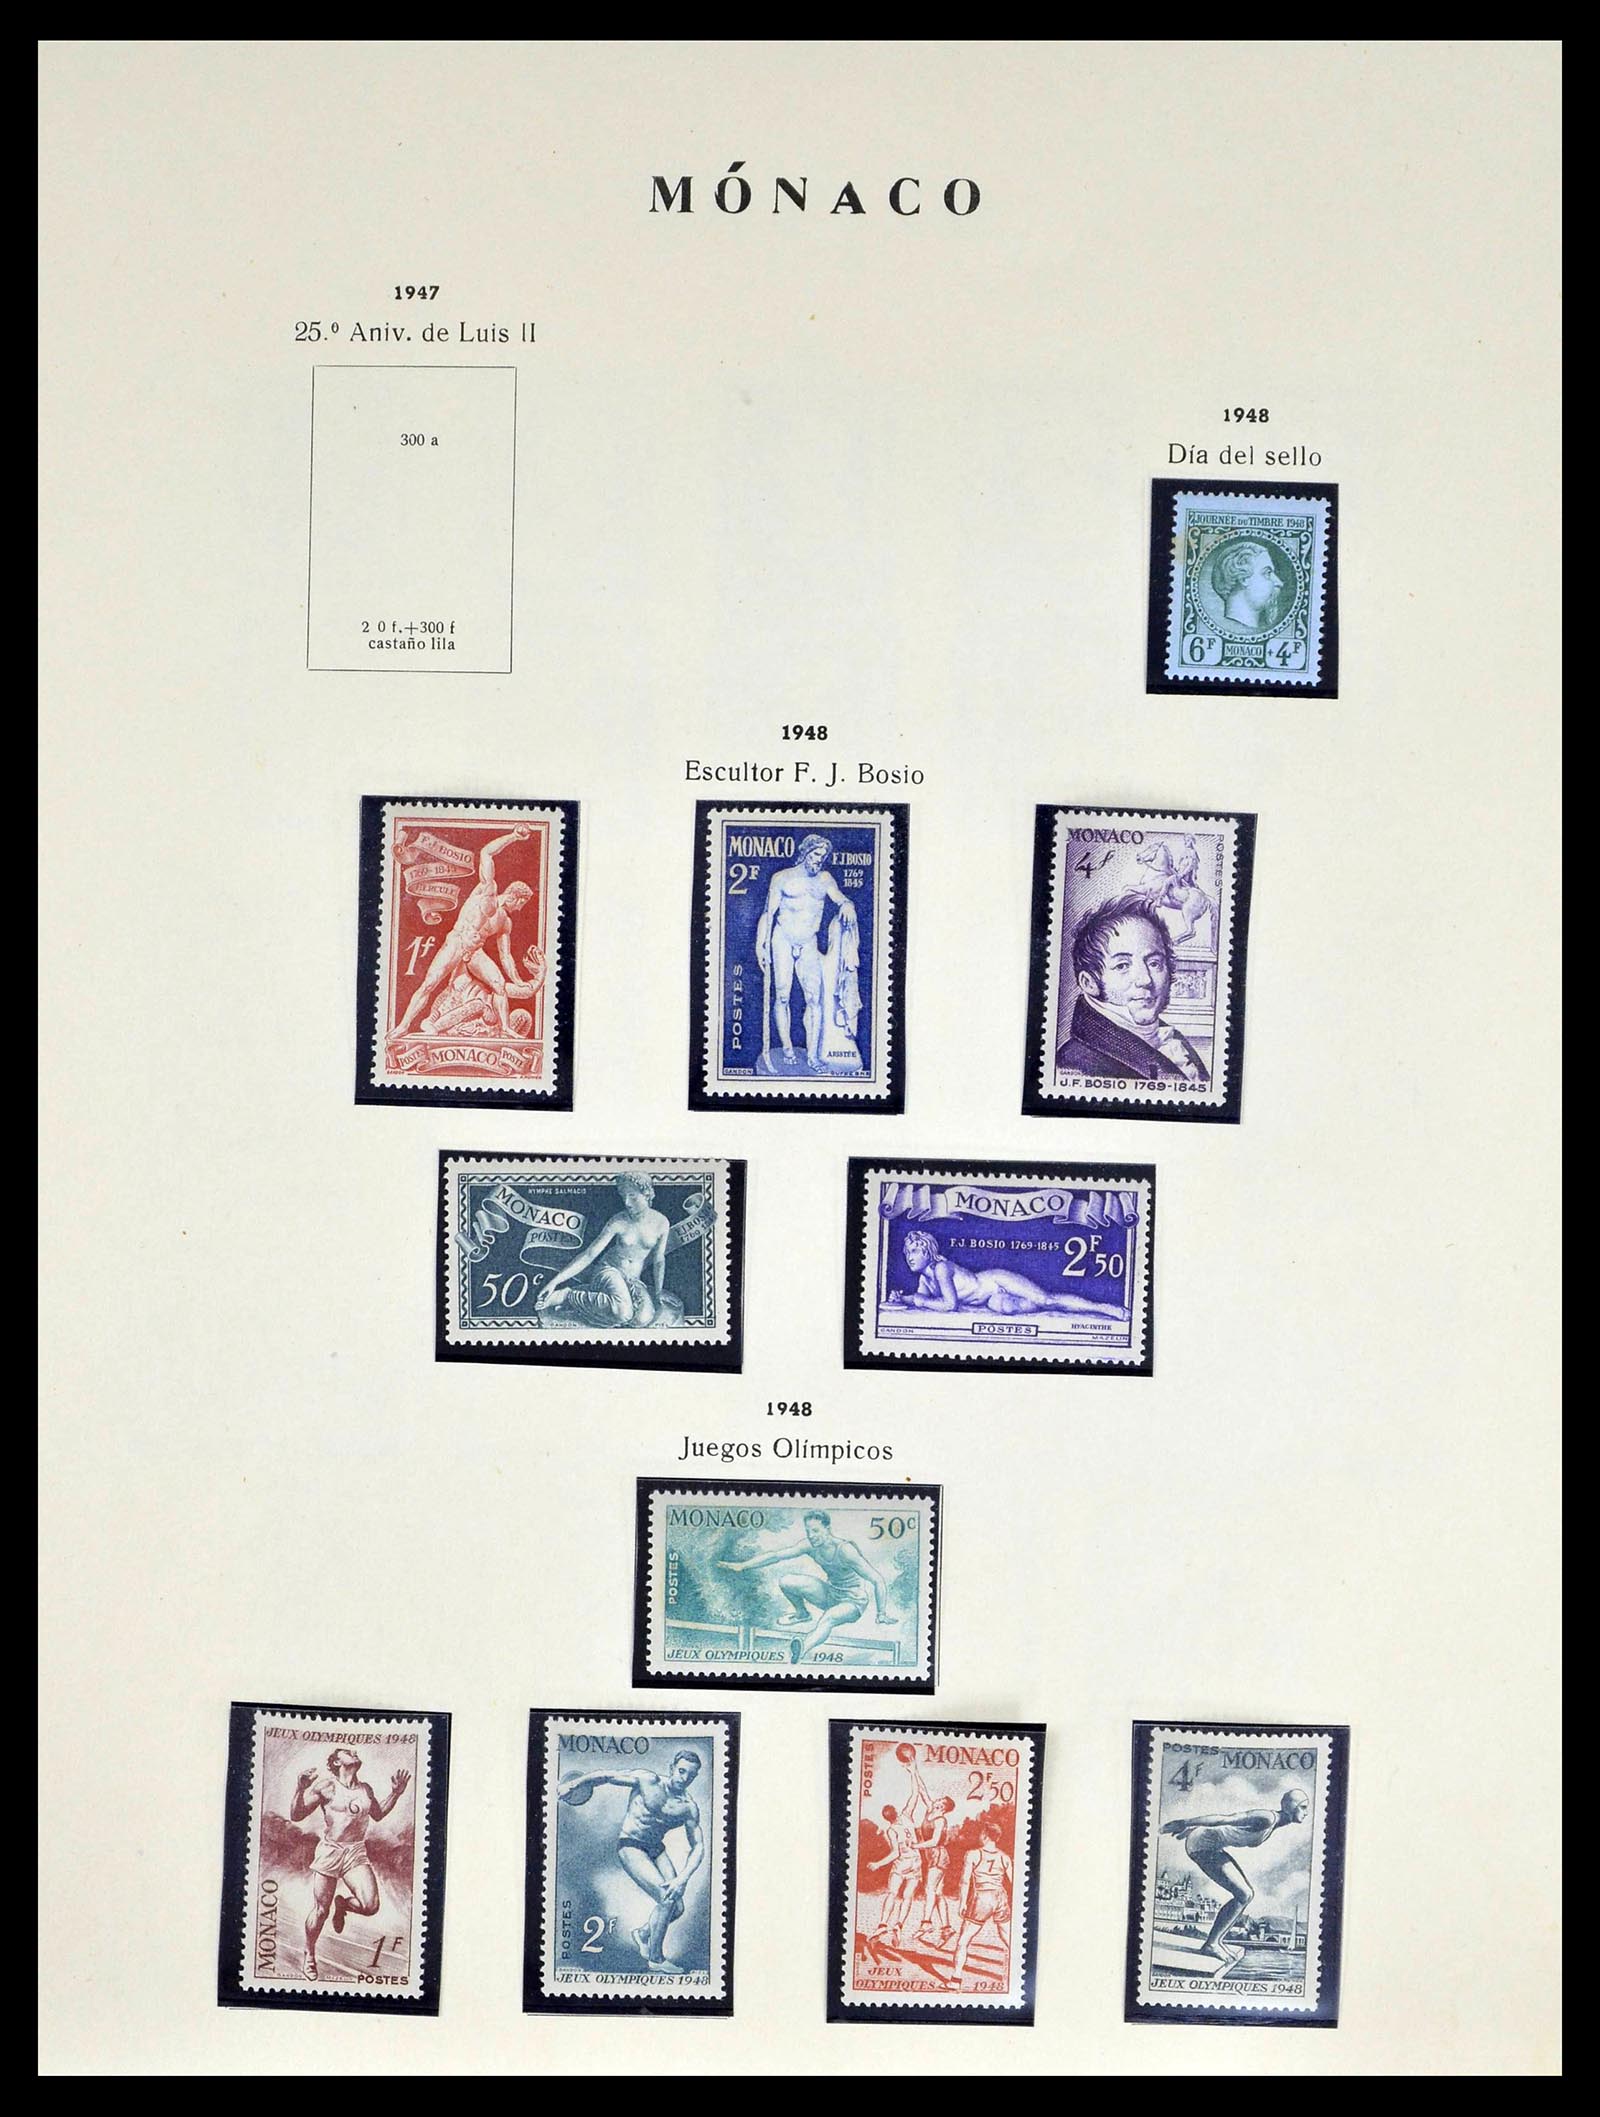 39082 0018 - Stamp collection 39082 Monaco 1885-1964.